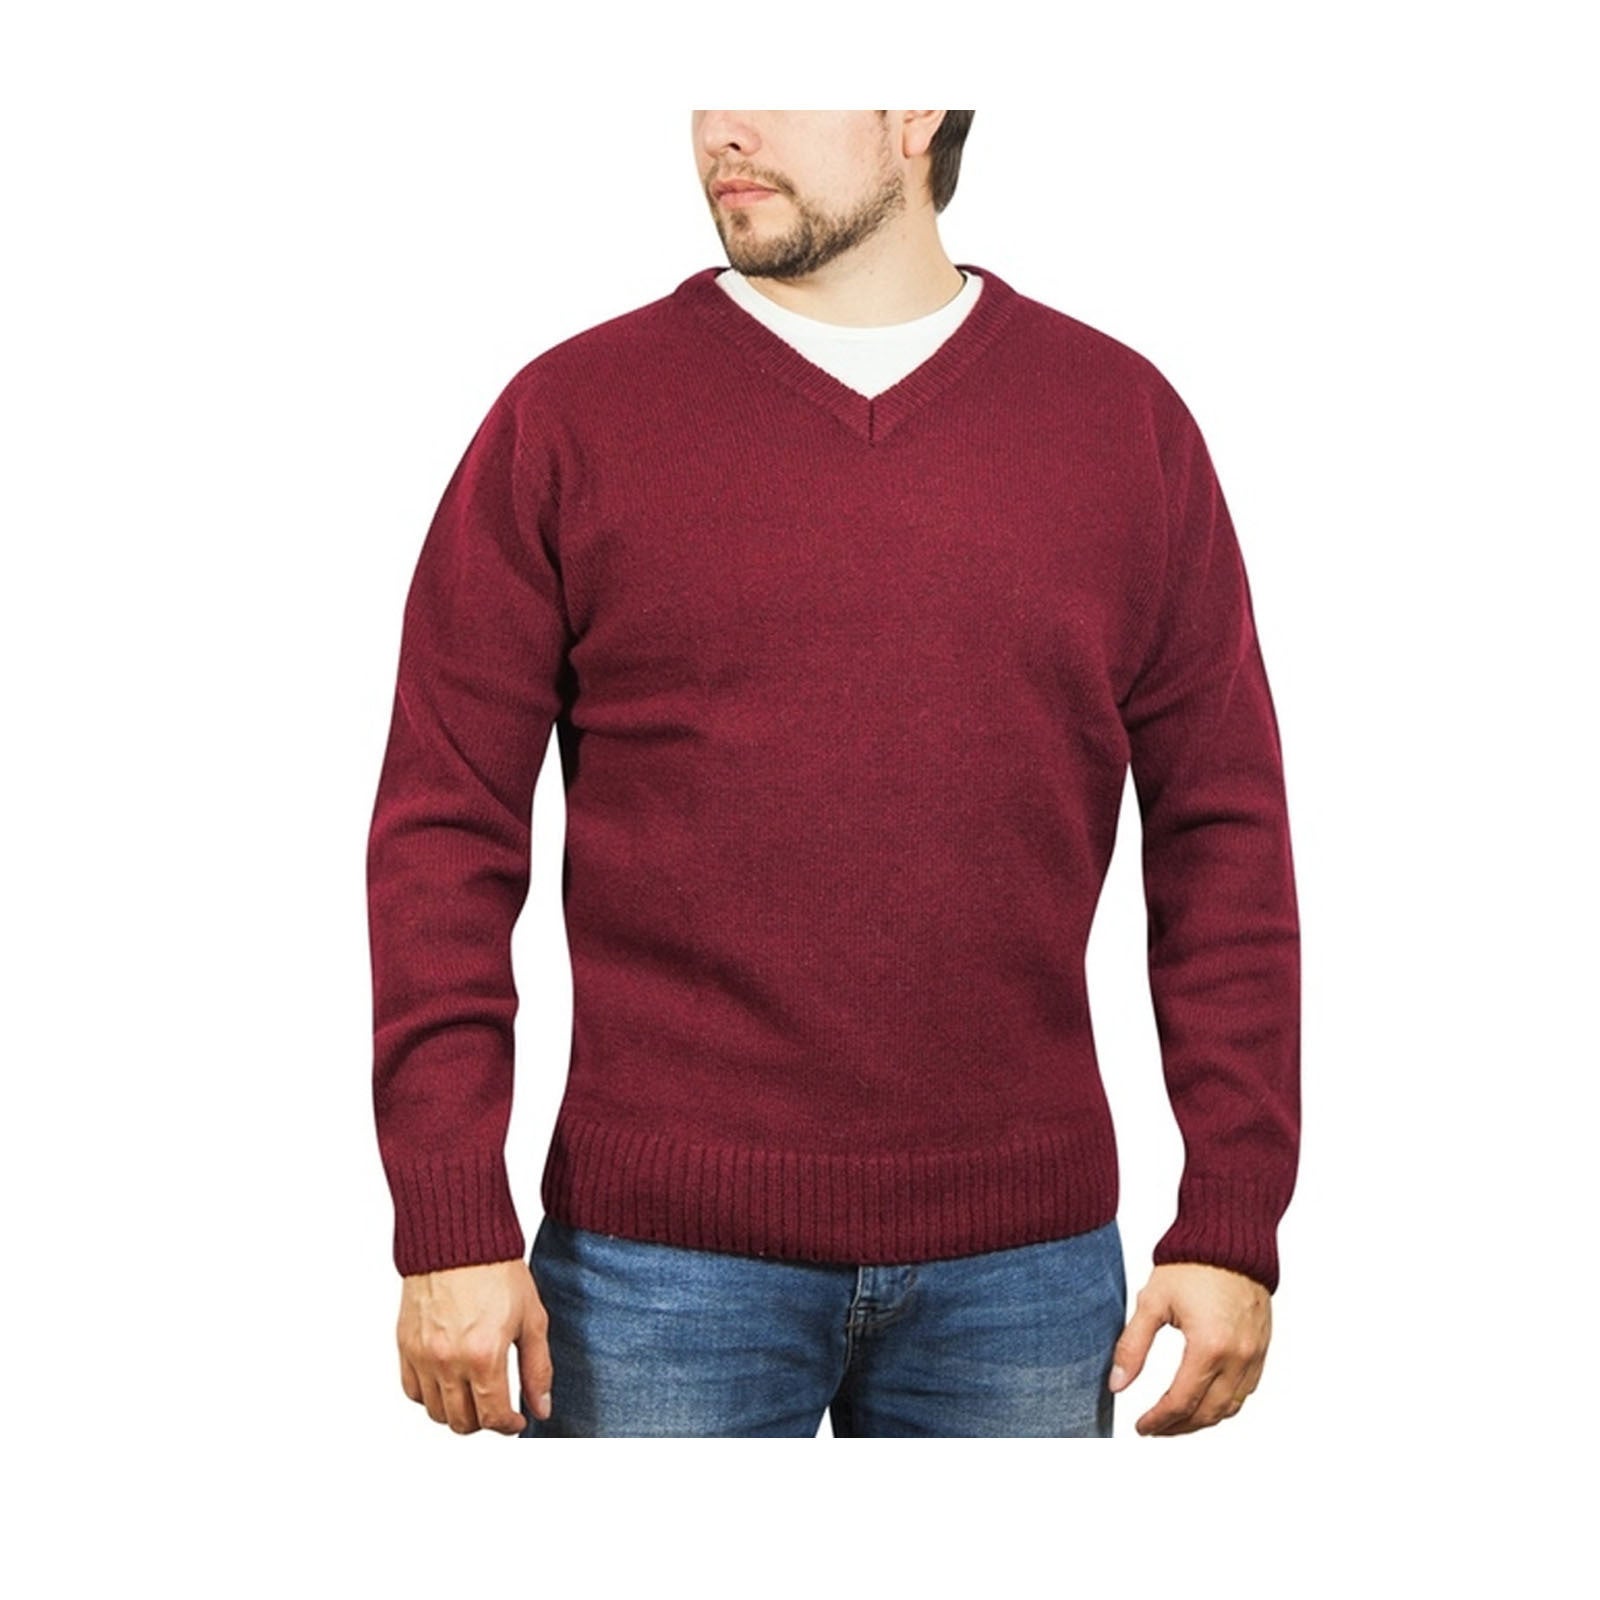 100% Shetland Wool V Neck Knit Jumper Pullover Mens Sweater Knitted